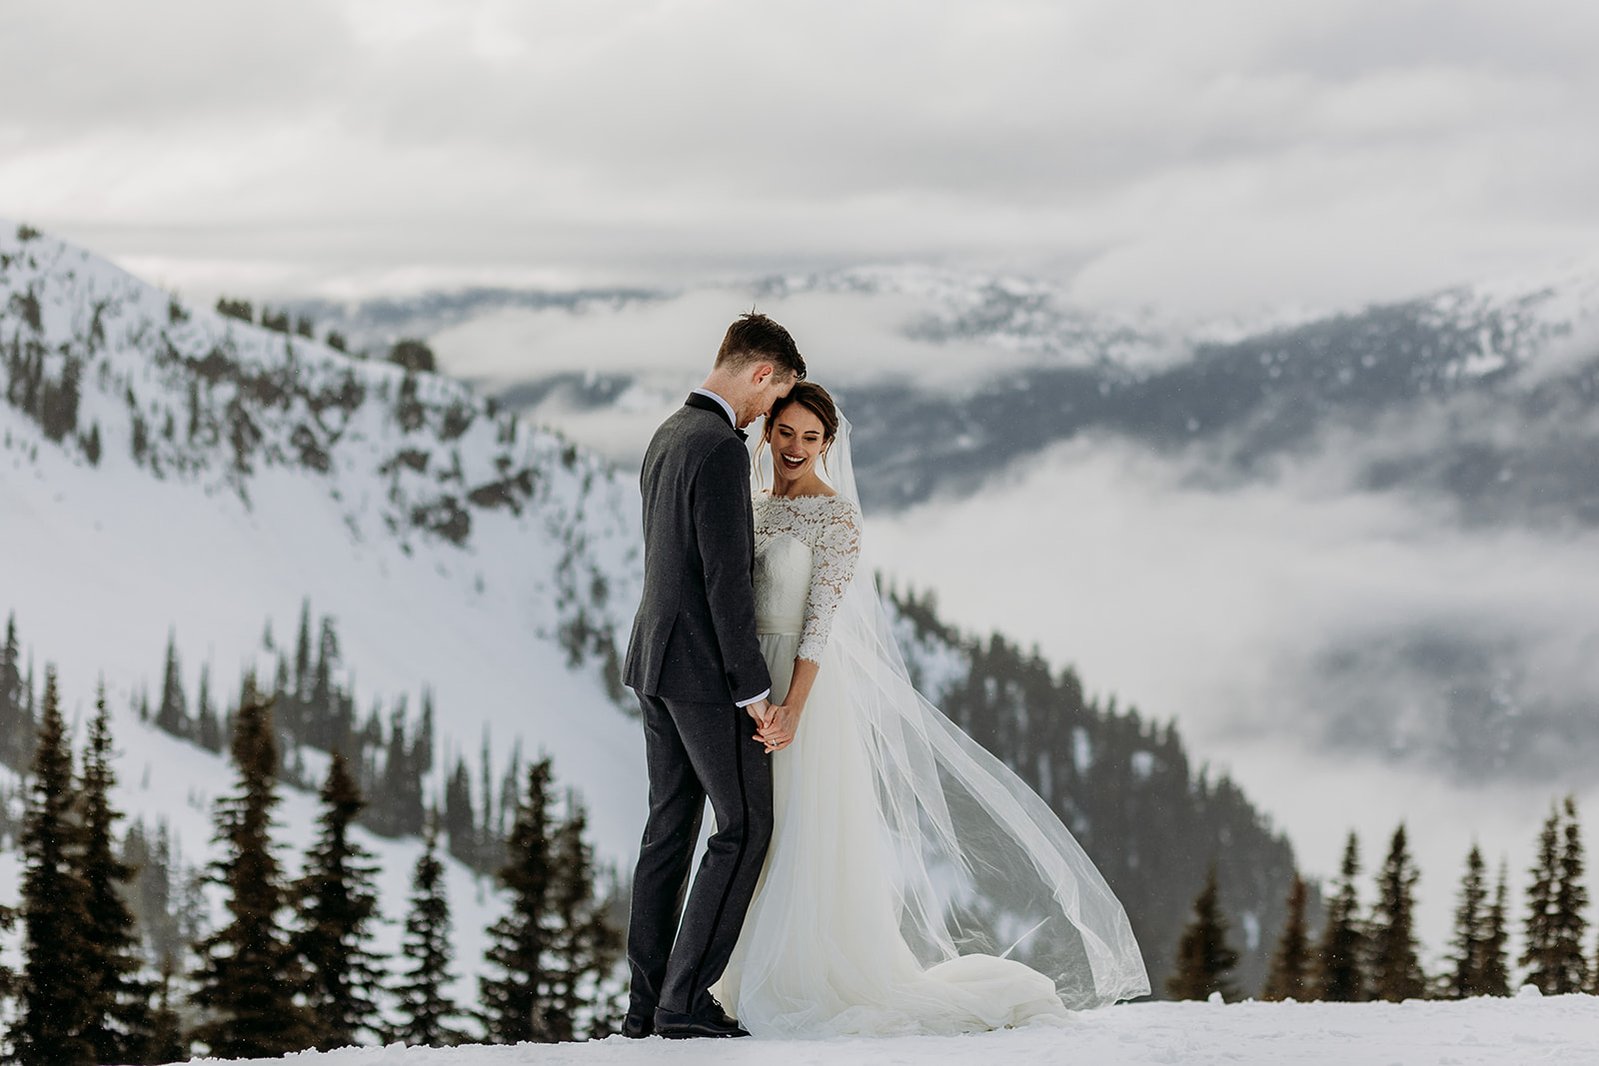 Winter wedding in whistler 
https://leahkathrynphoto.com/